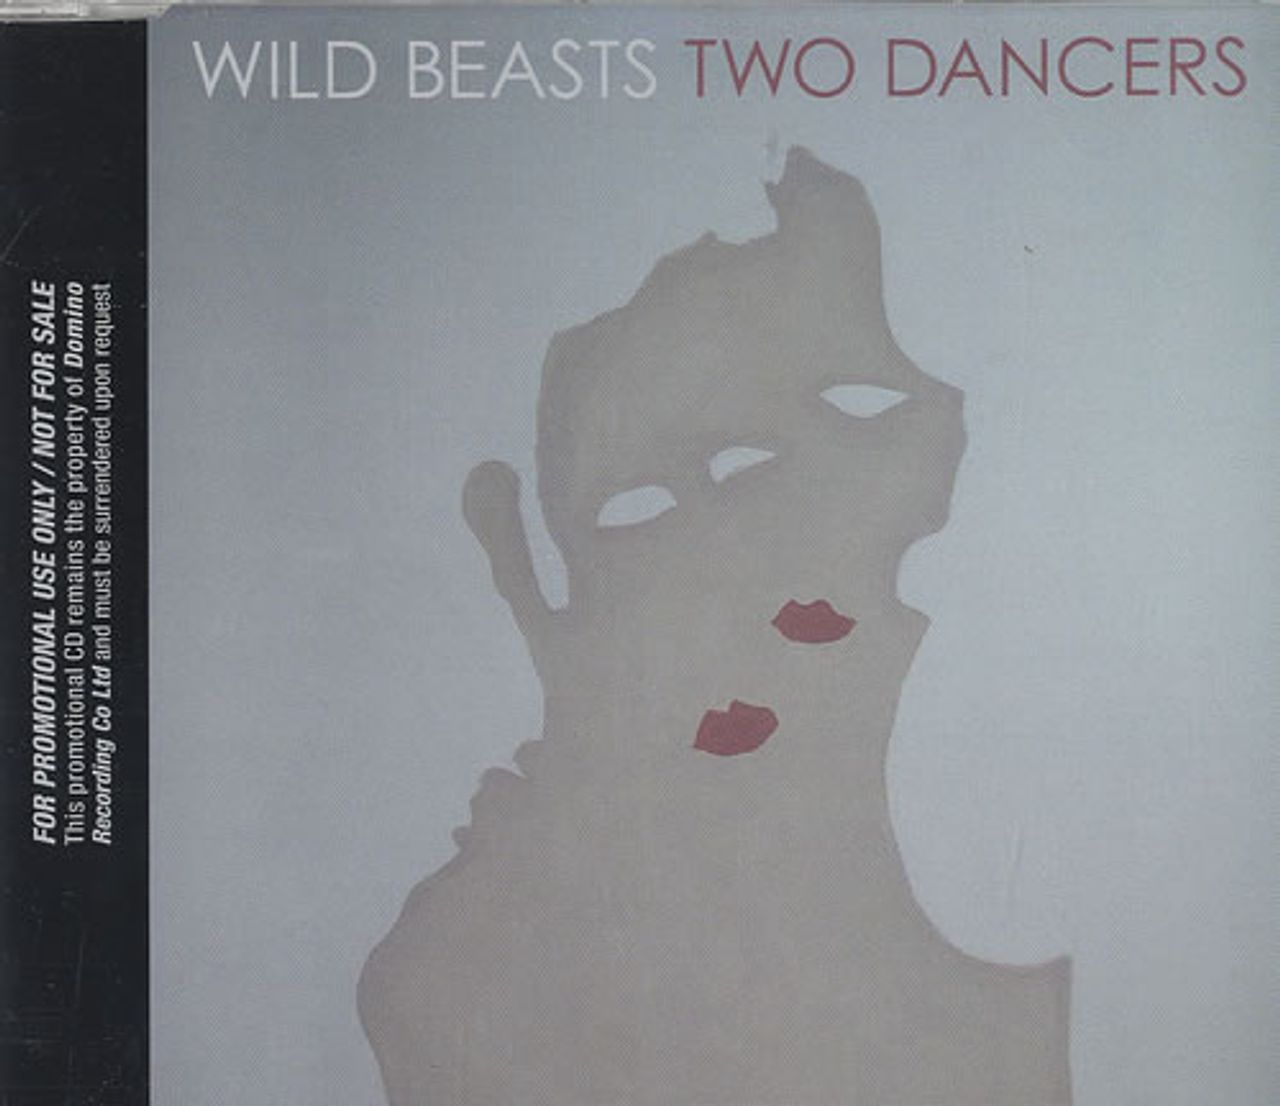 Wild Beasts Two Dancers UK Promo CD album (CDLP) WIGDD238P